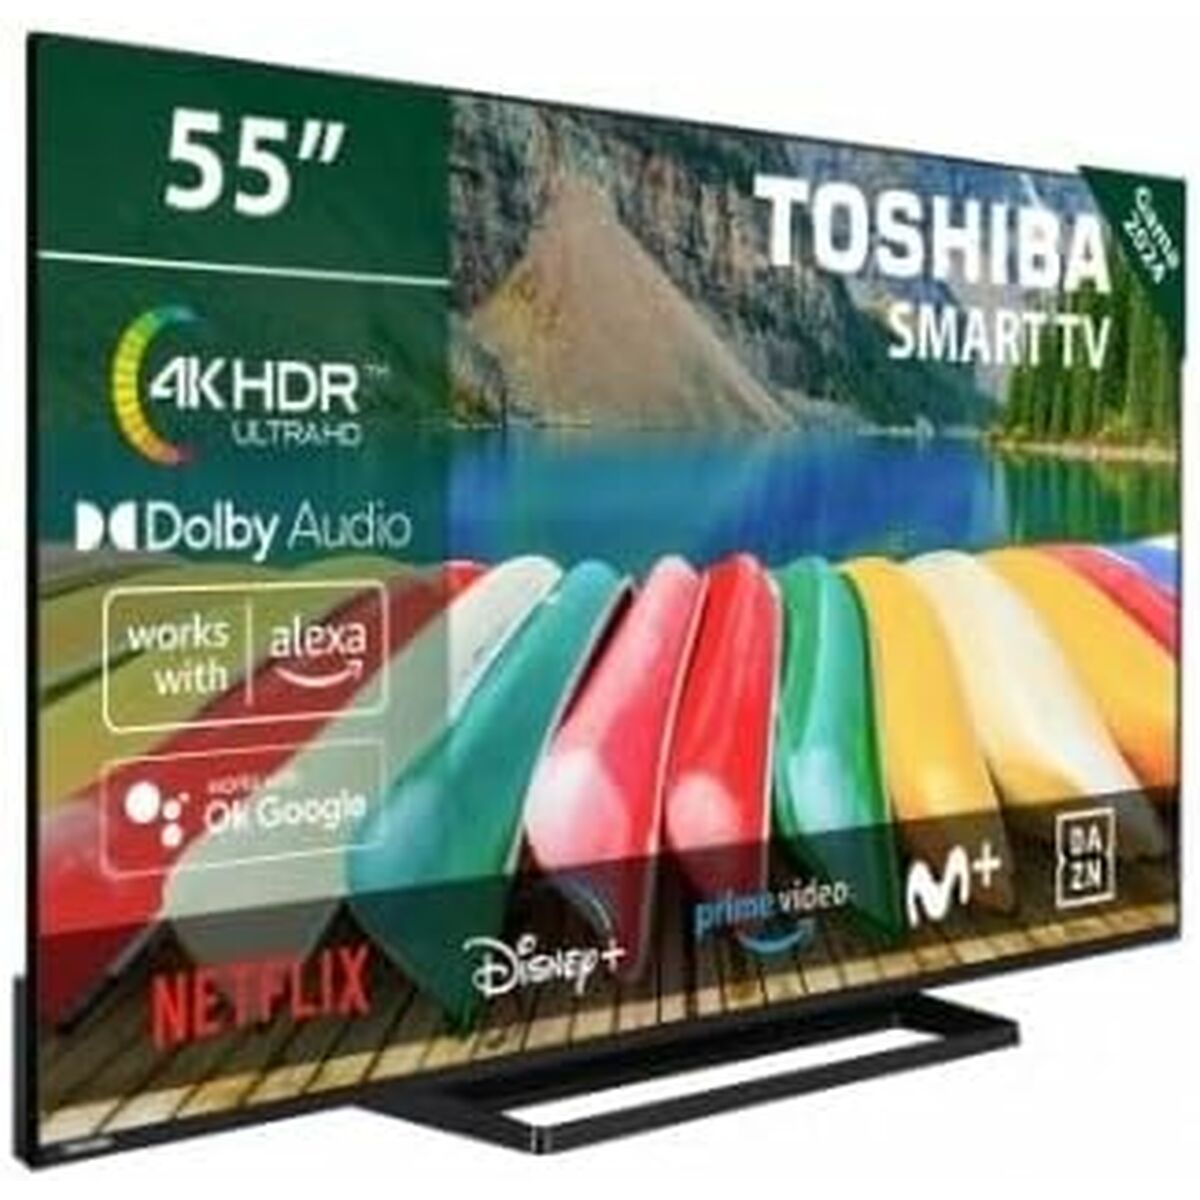 Smart TV Toshiba 55UV3363DG  4K Ultra HD 55"